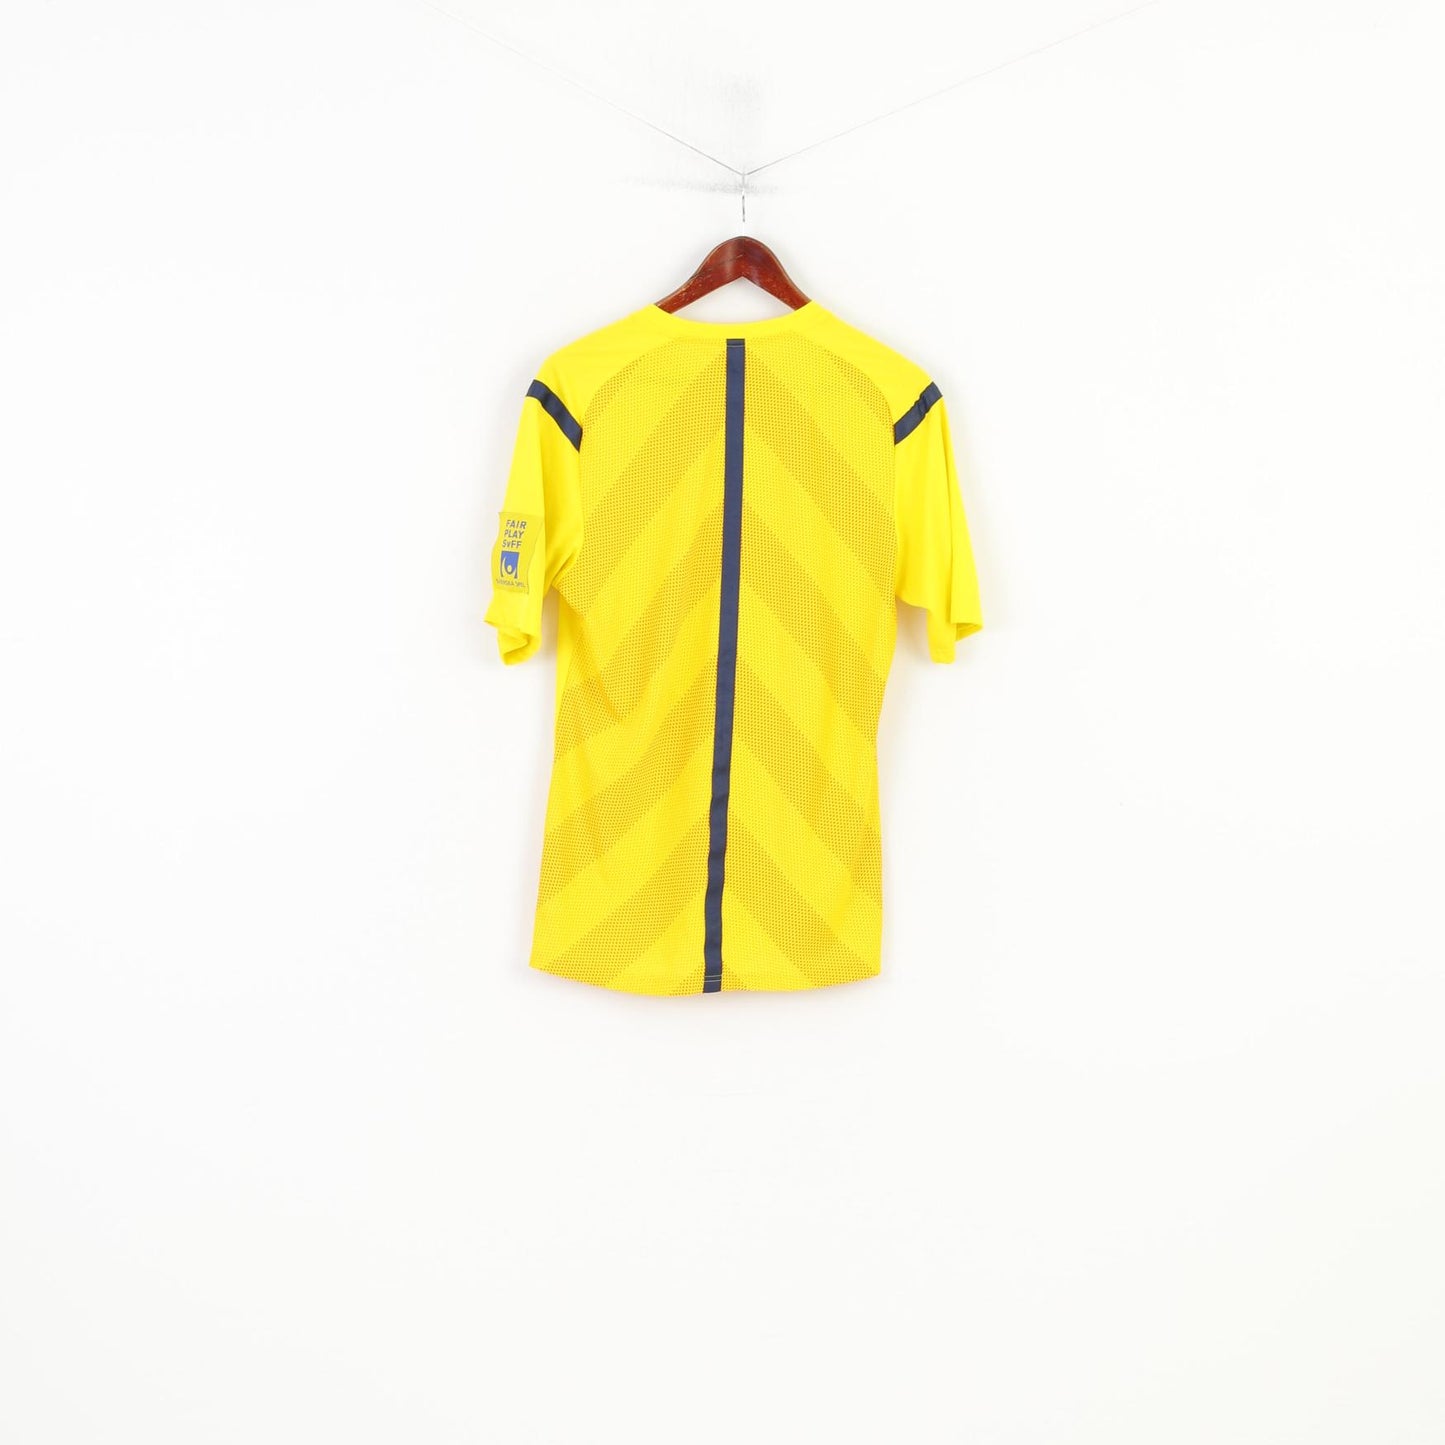 Adidas  Men M Shirt Yellow Football Club Sportswear Svenska Fotbollförbundet Vintage Top